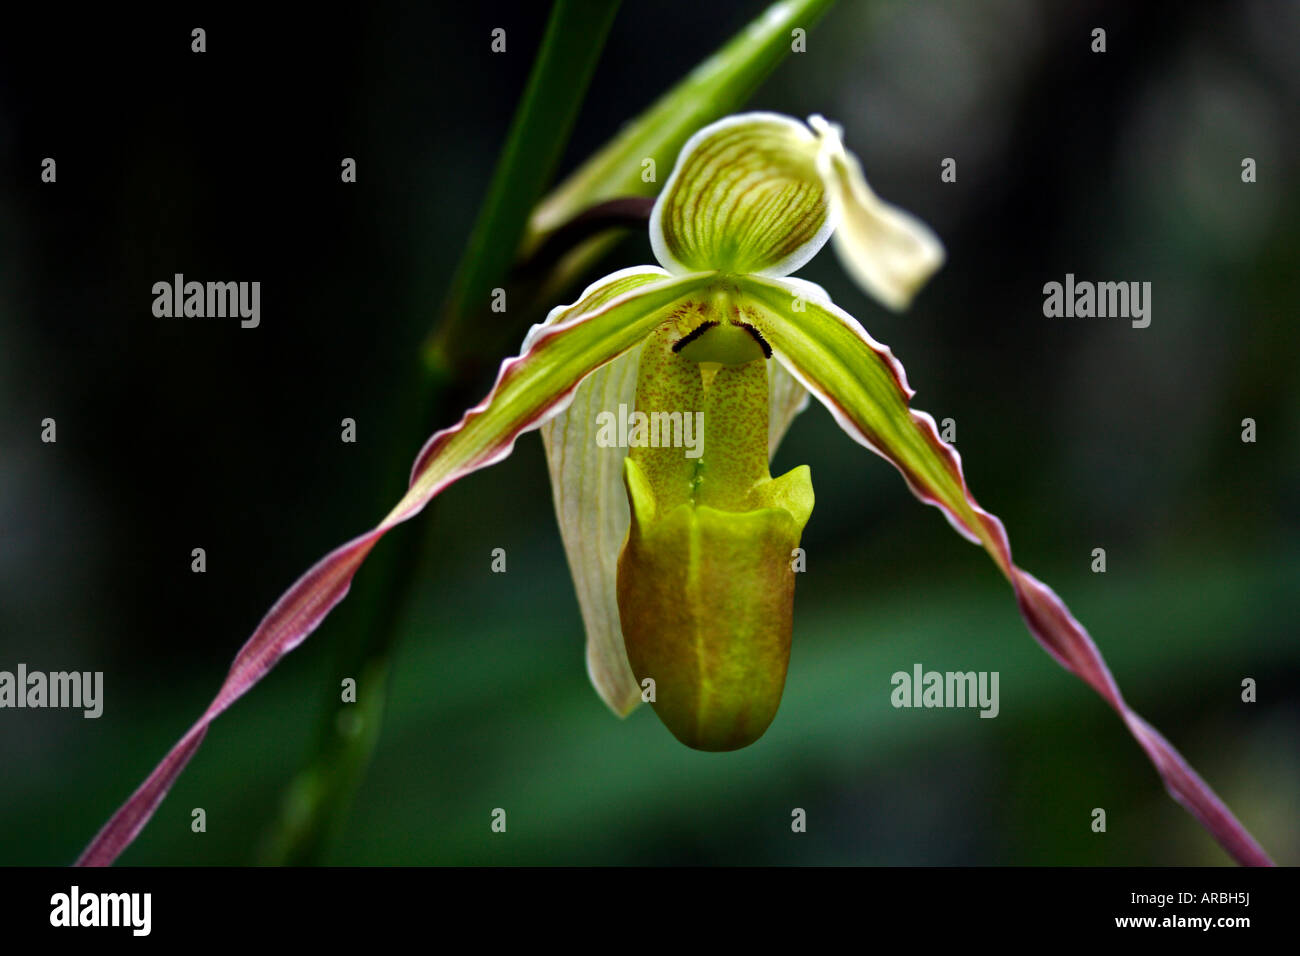 Close-up of a Phragmipedium orchid flower Stock Photo